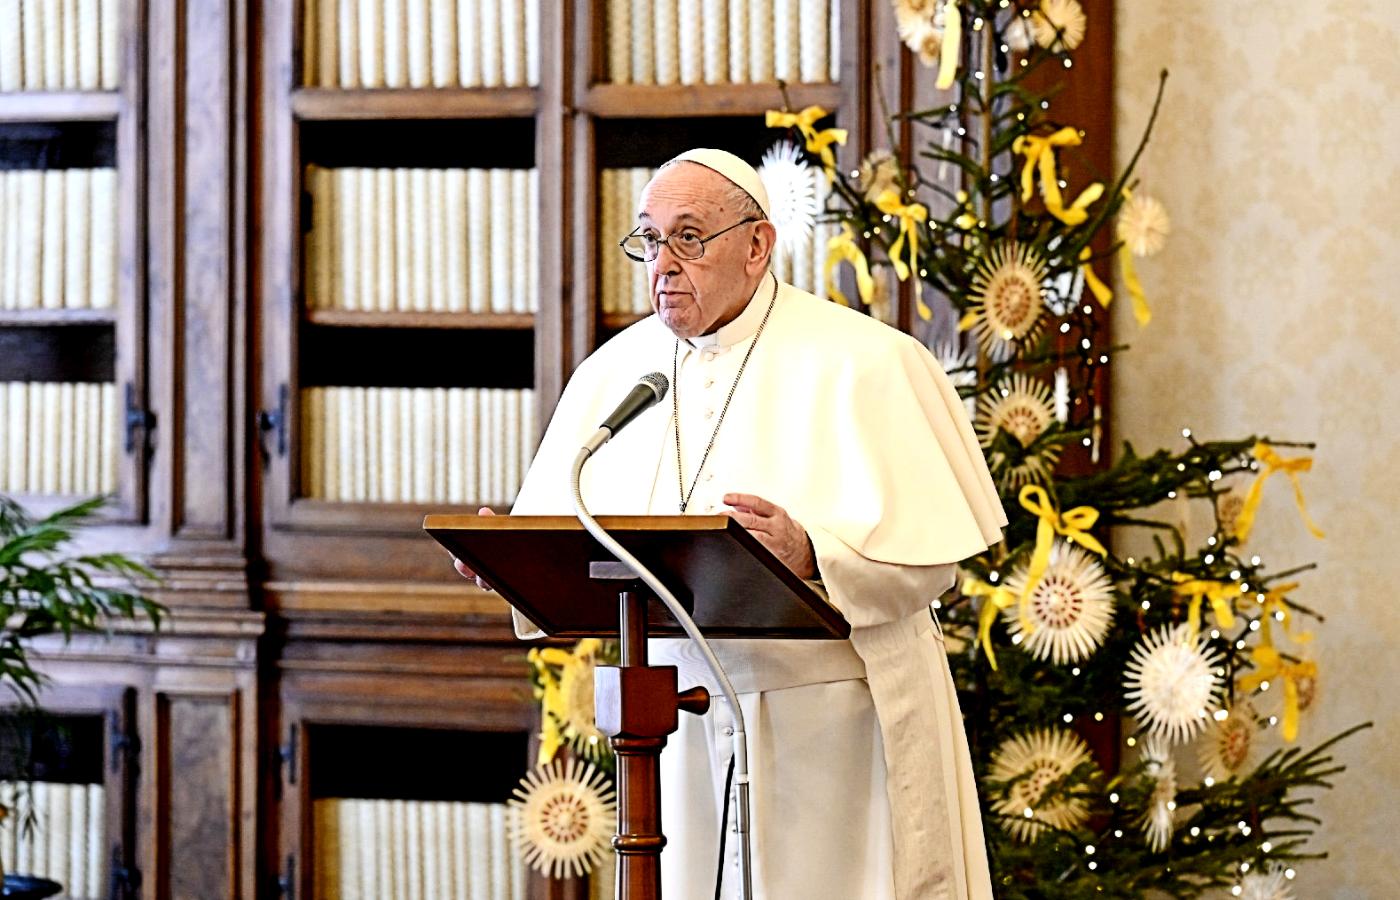 Papież Franciszek podczas Święta Trzech Króli